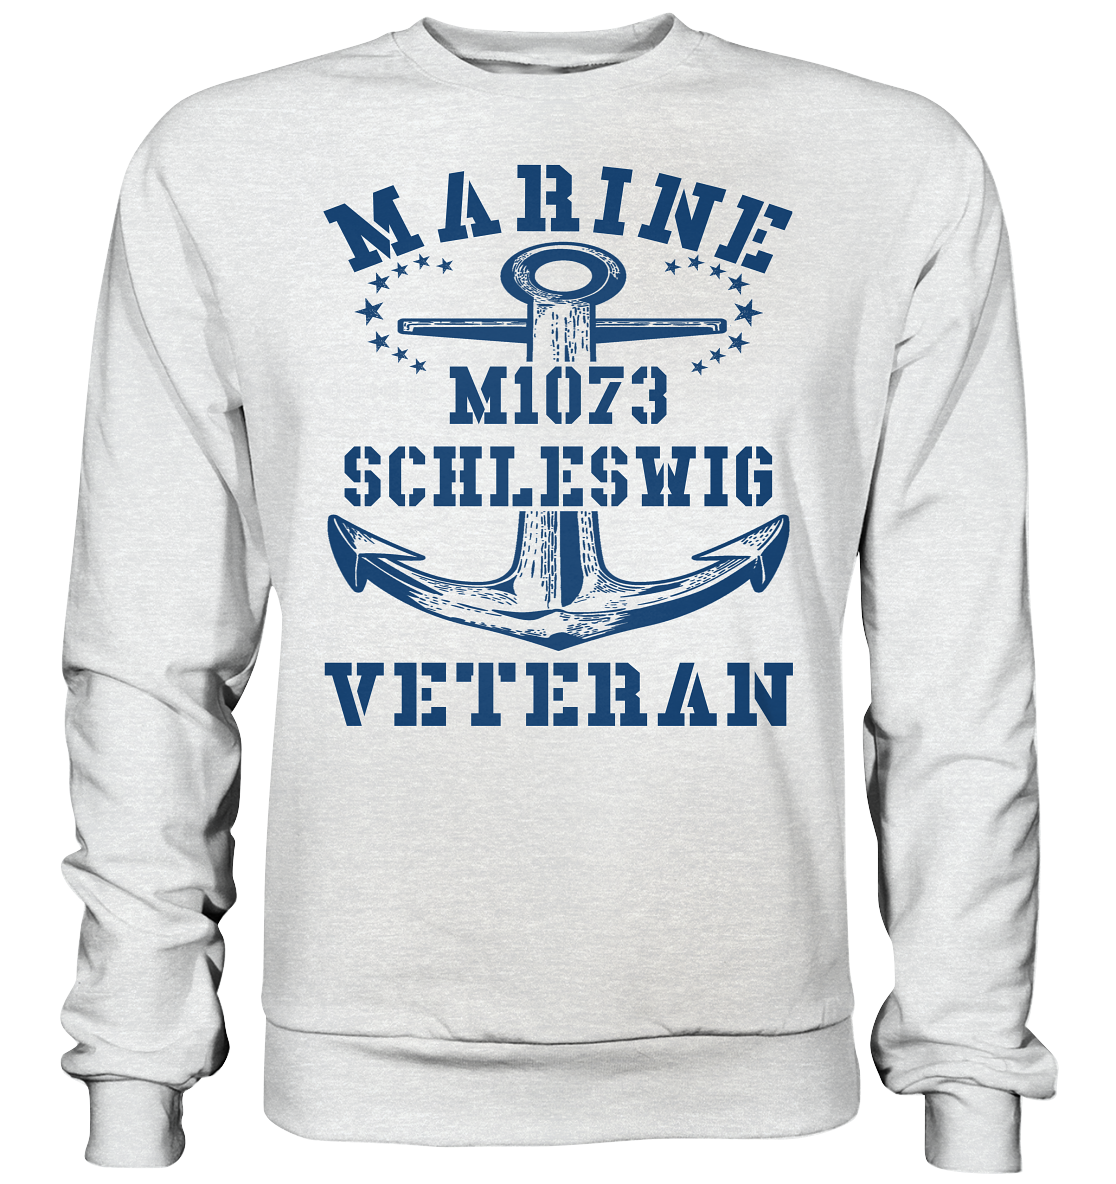 MARINE VETERAN M1073 SCHLESWIG - Premium Sweatshirt